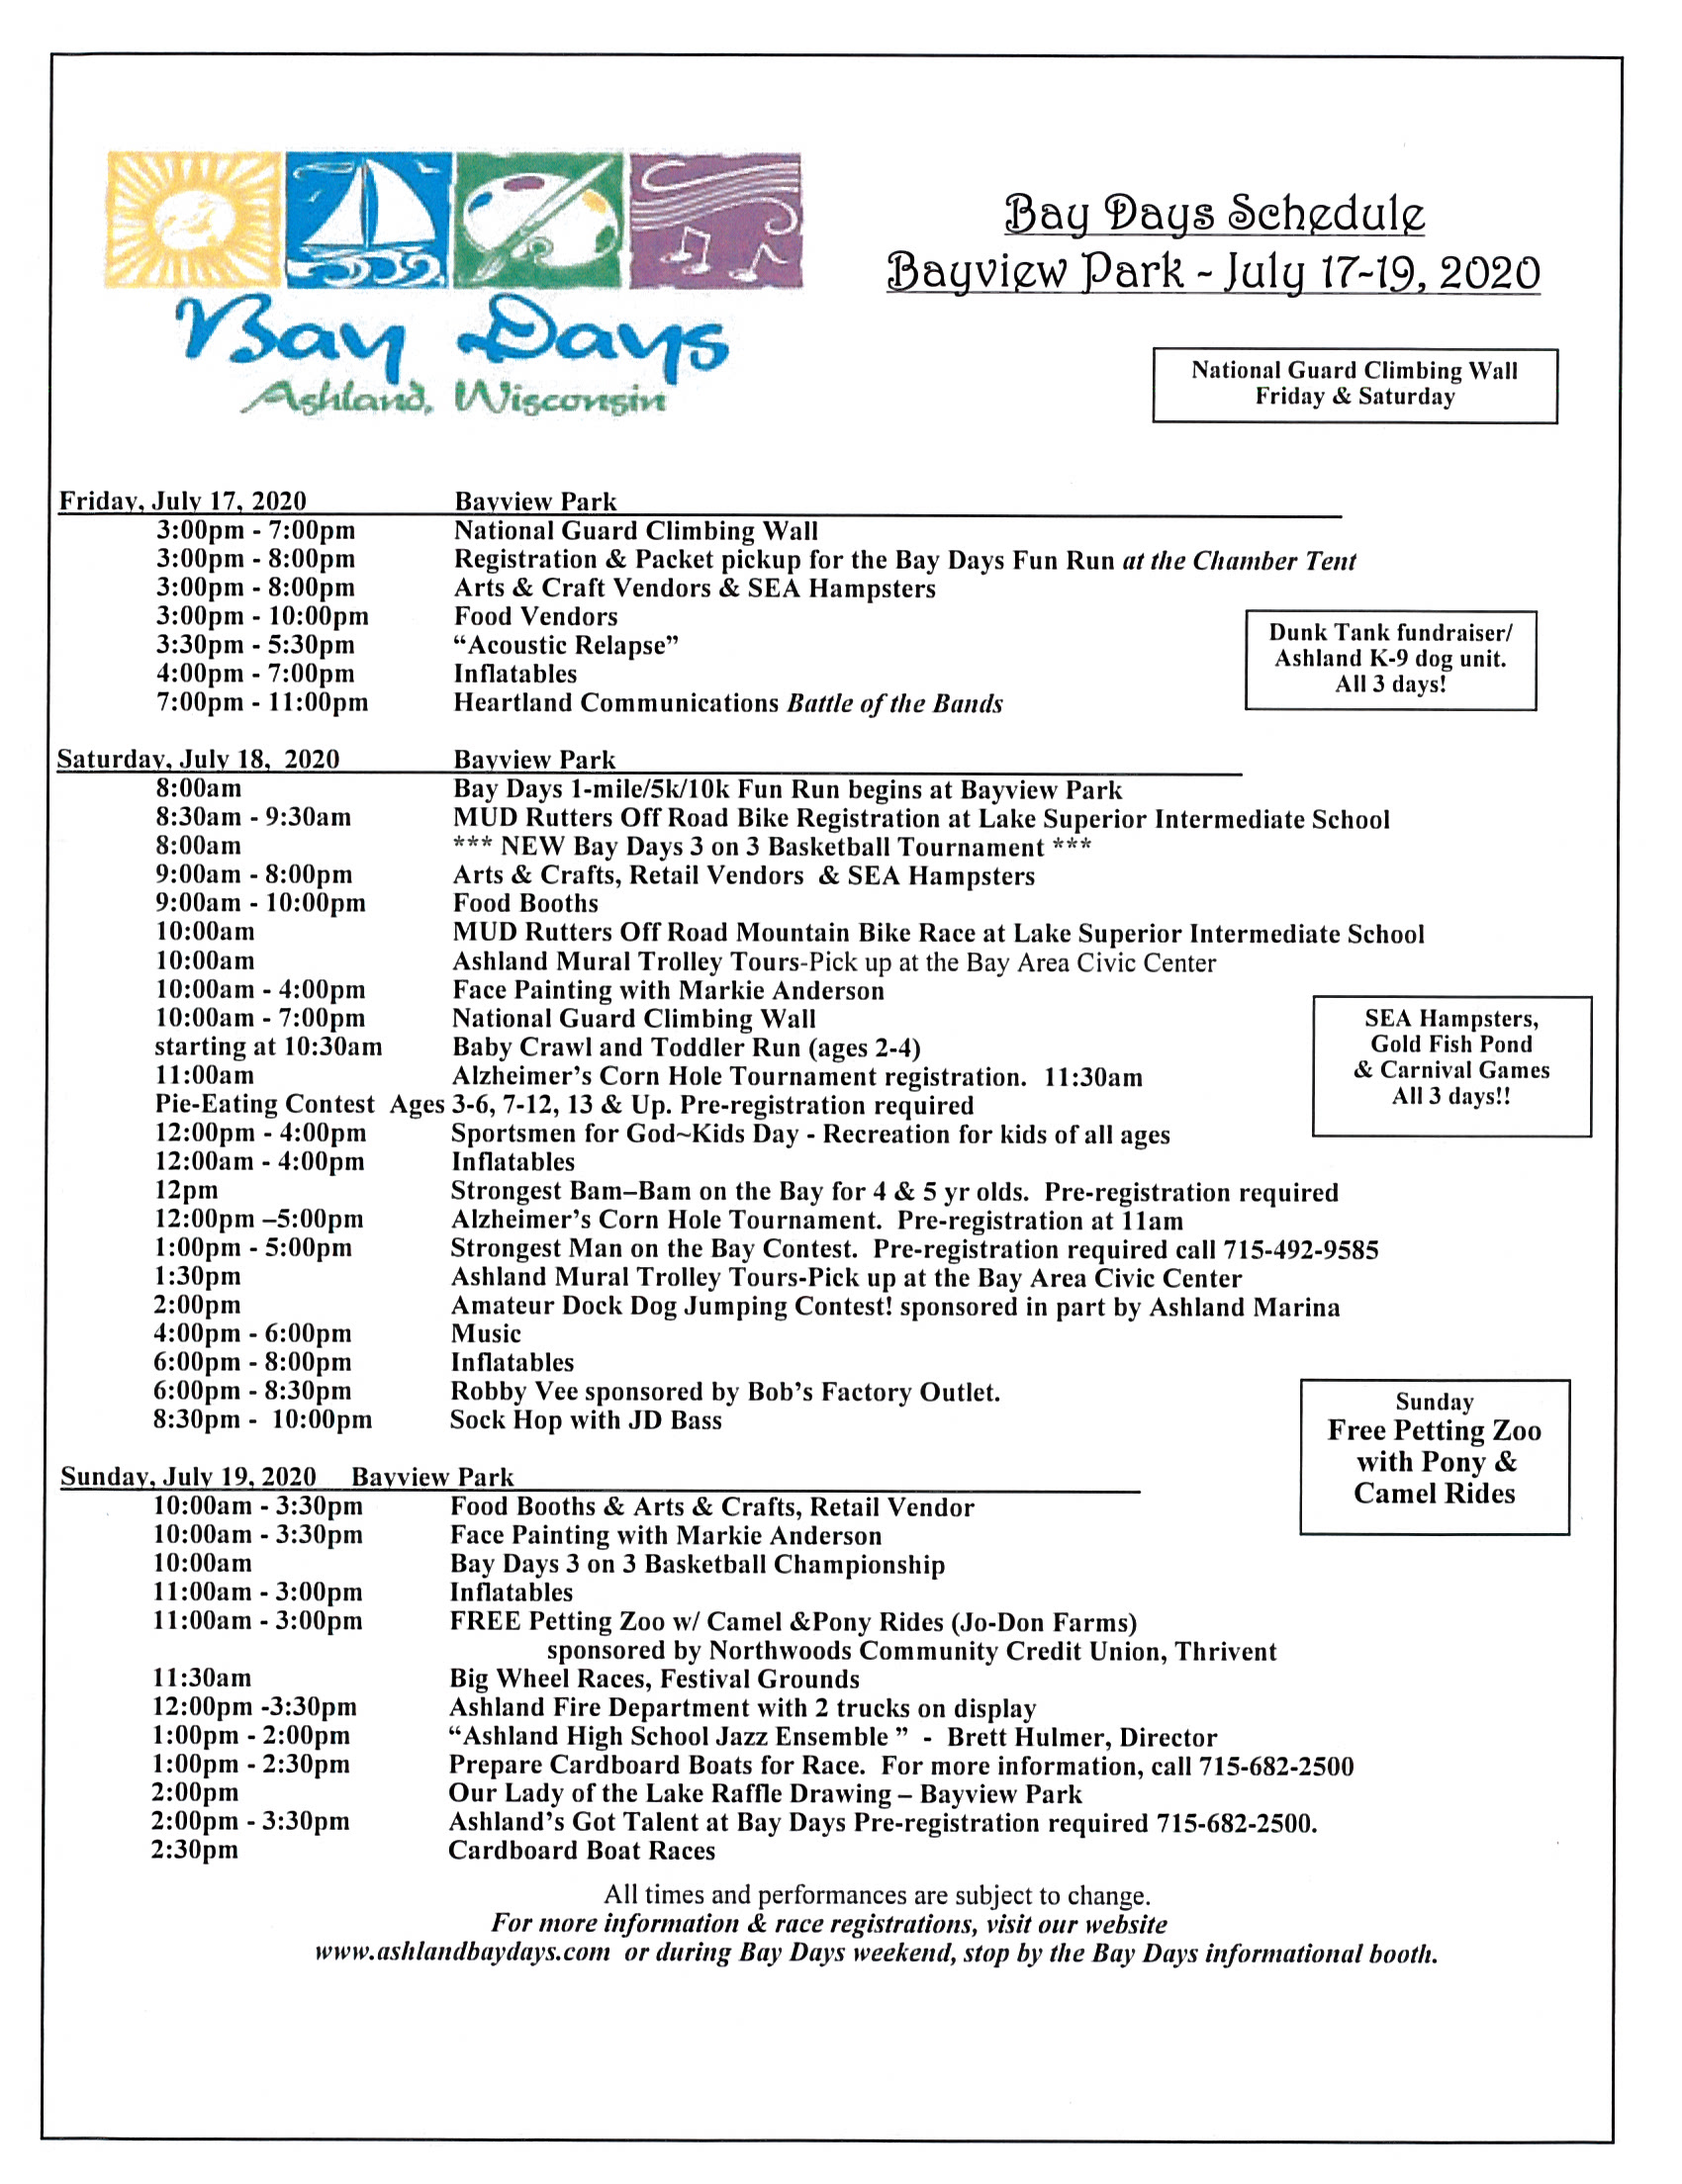 Ashland Bay Days 2020 Schedule of Events